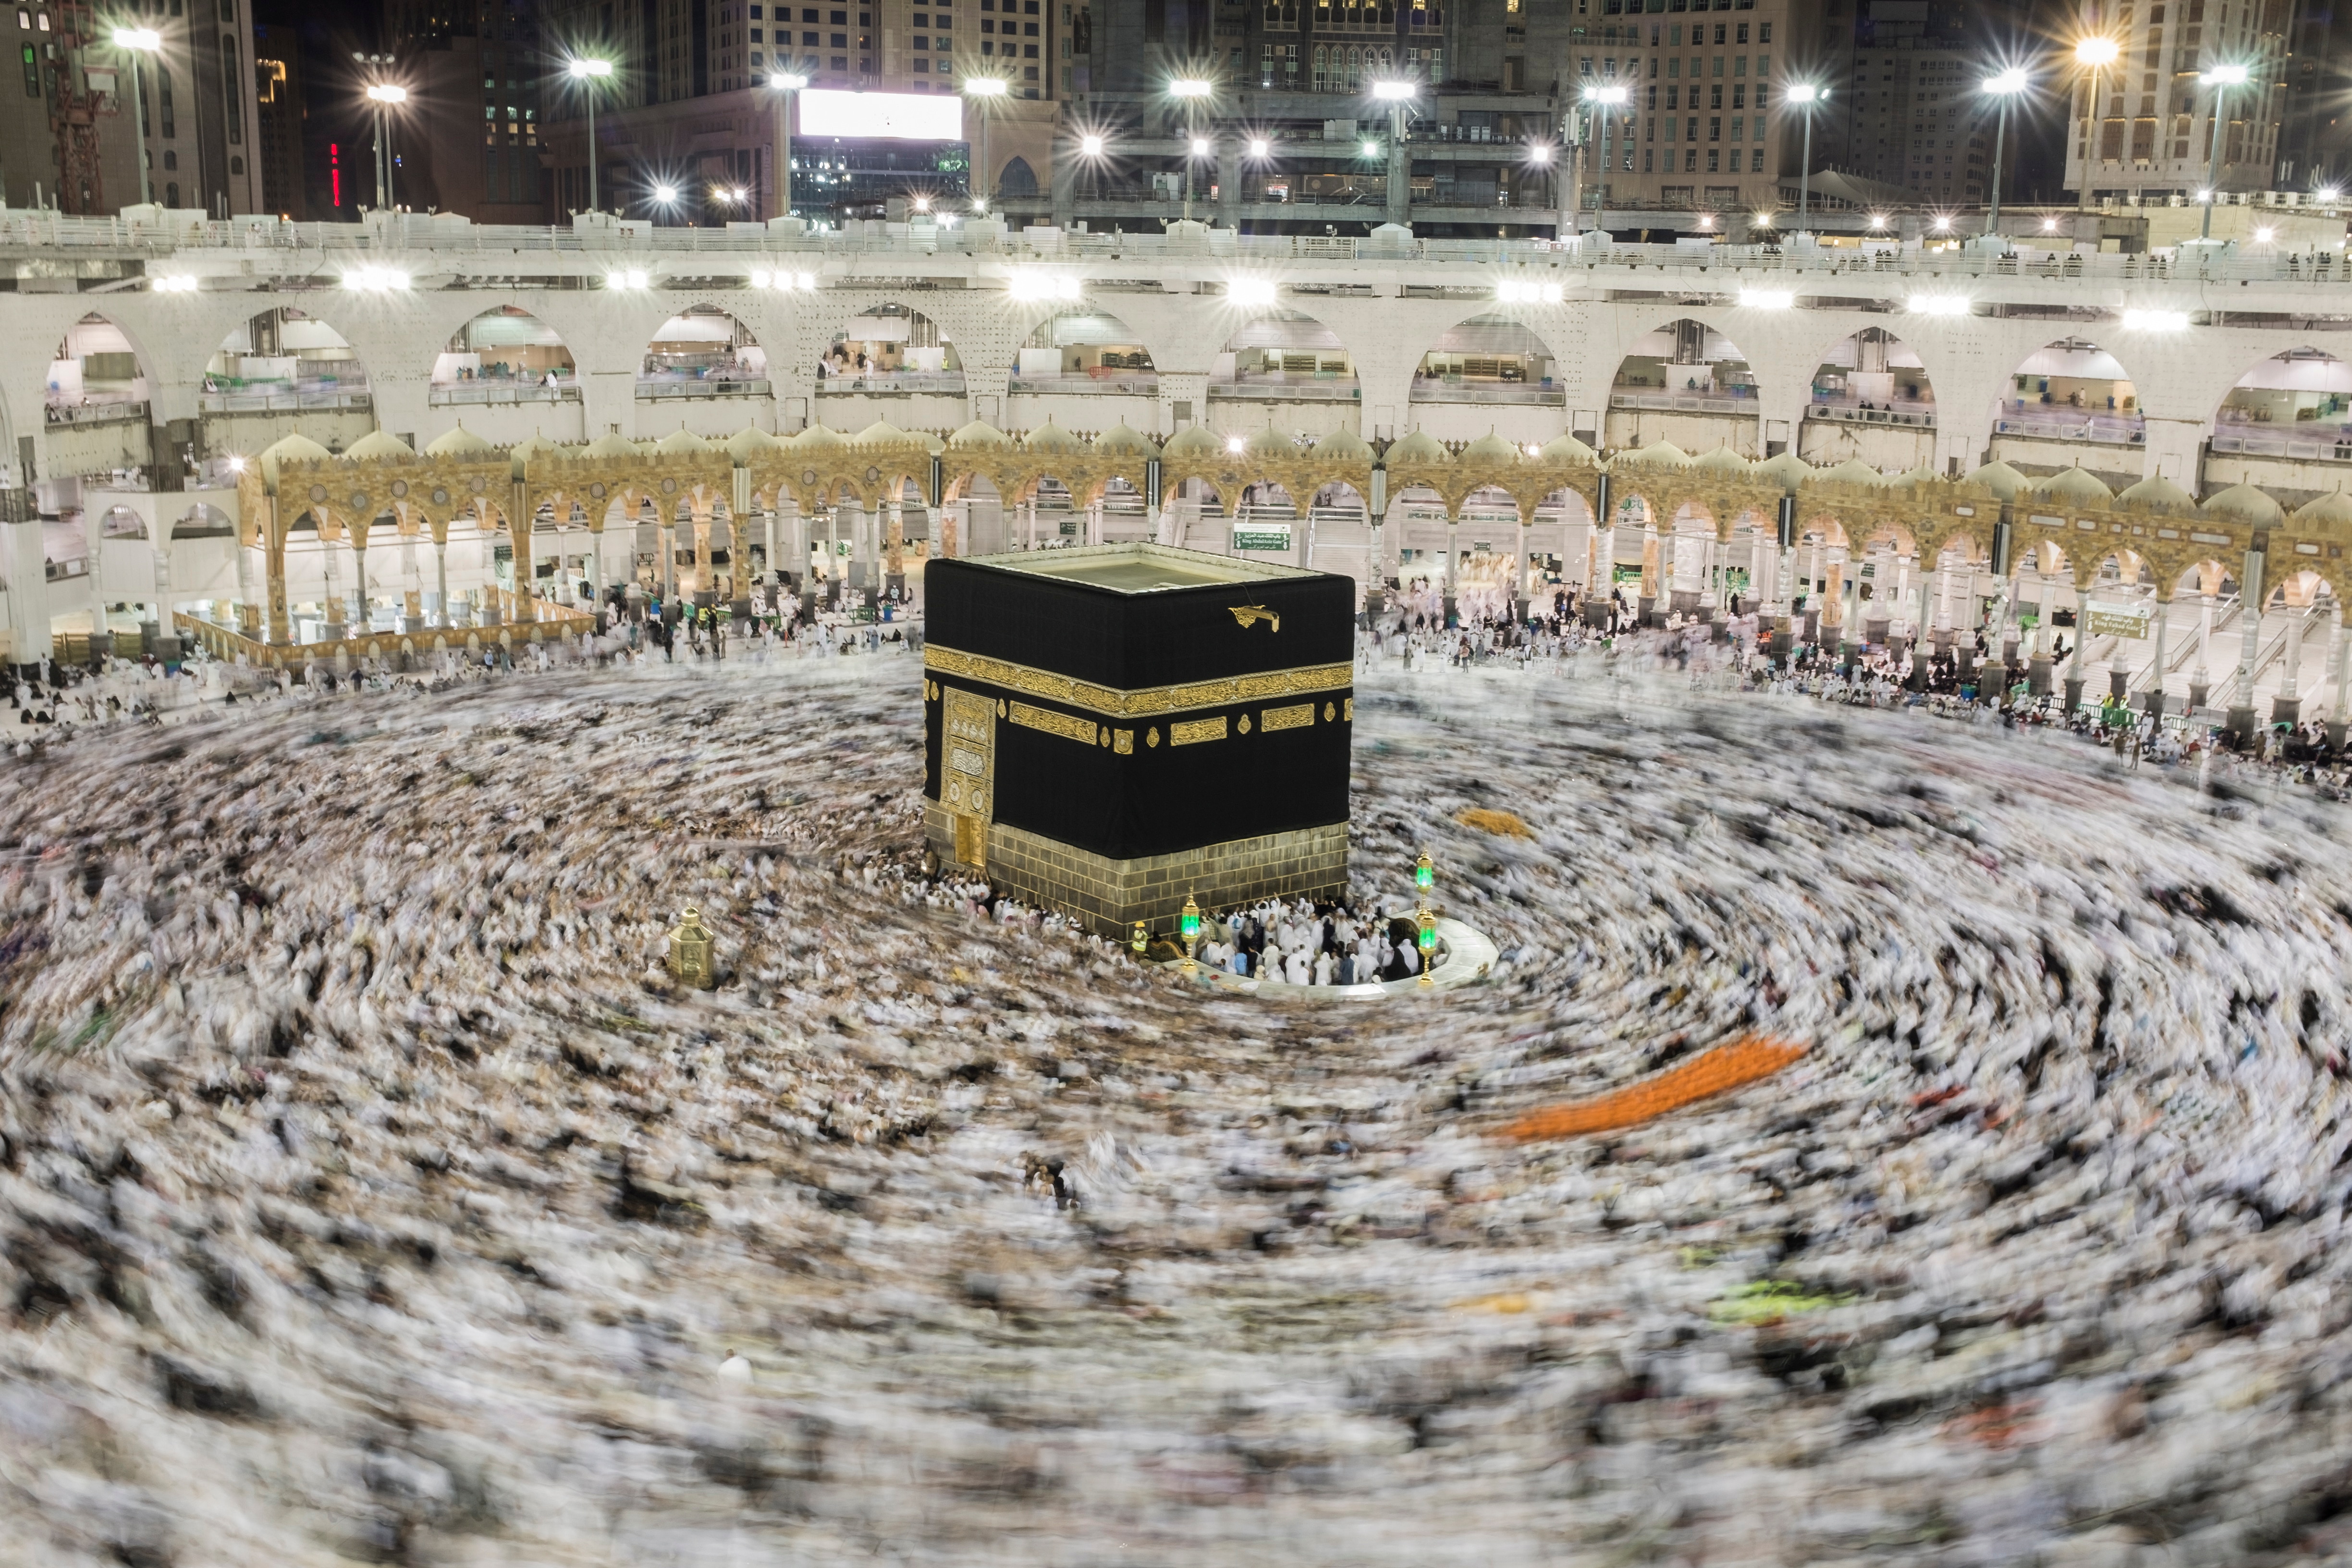 Muslim pilgrims circumvent the Kaaba at the Grand Mosque in Mecca, Saudi Arabia.